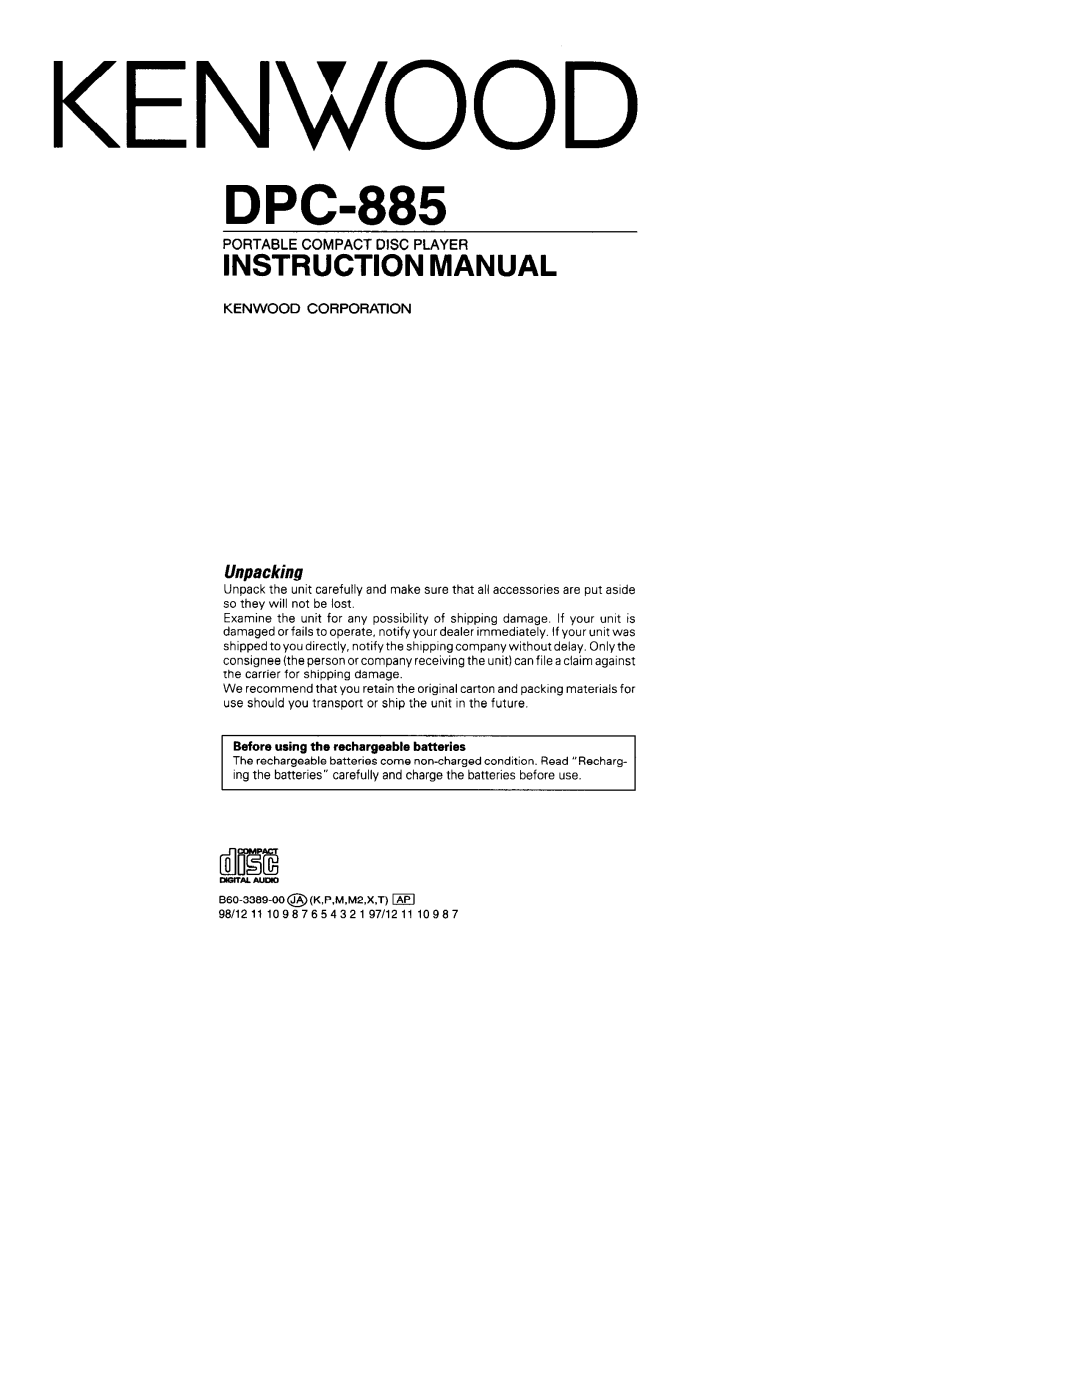 Kenwood DPC-885 manual 